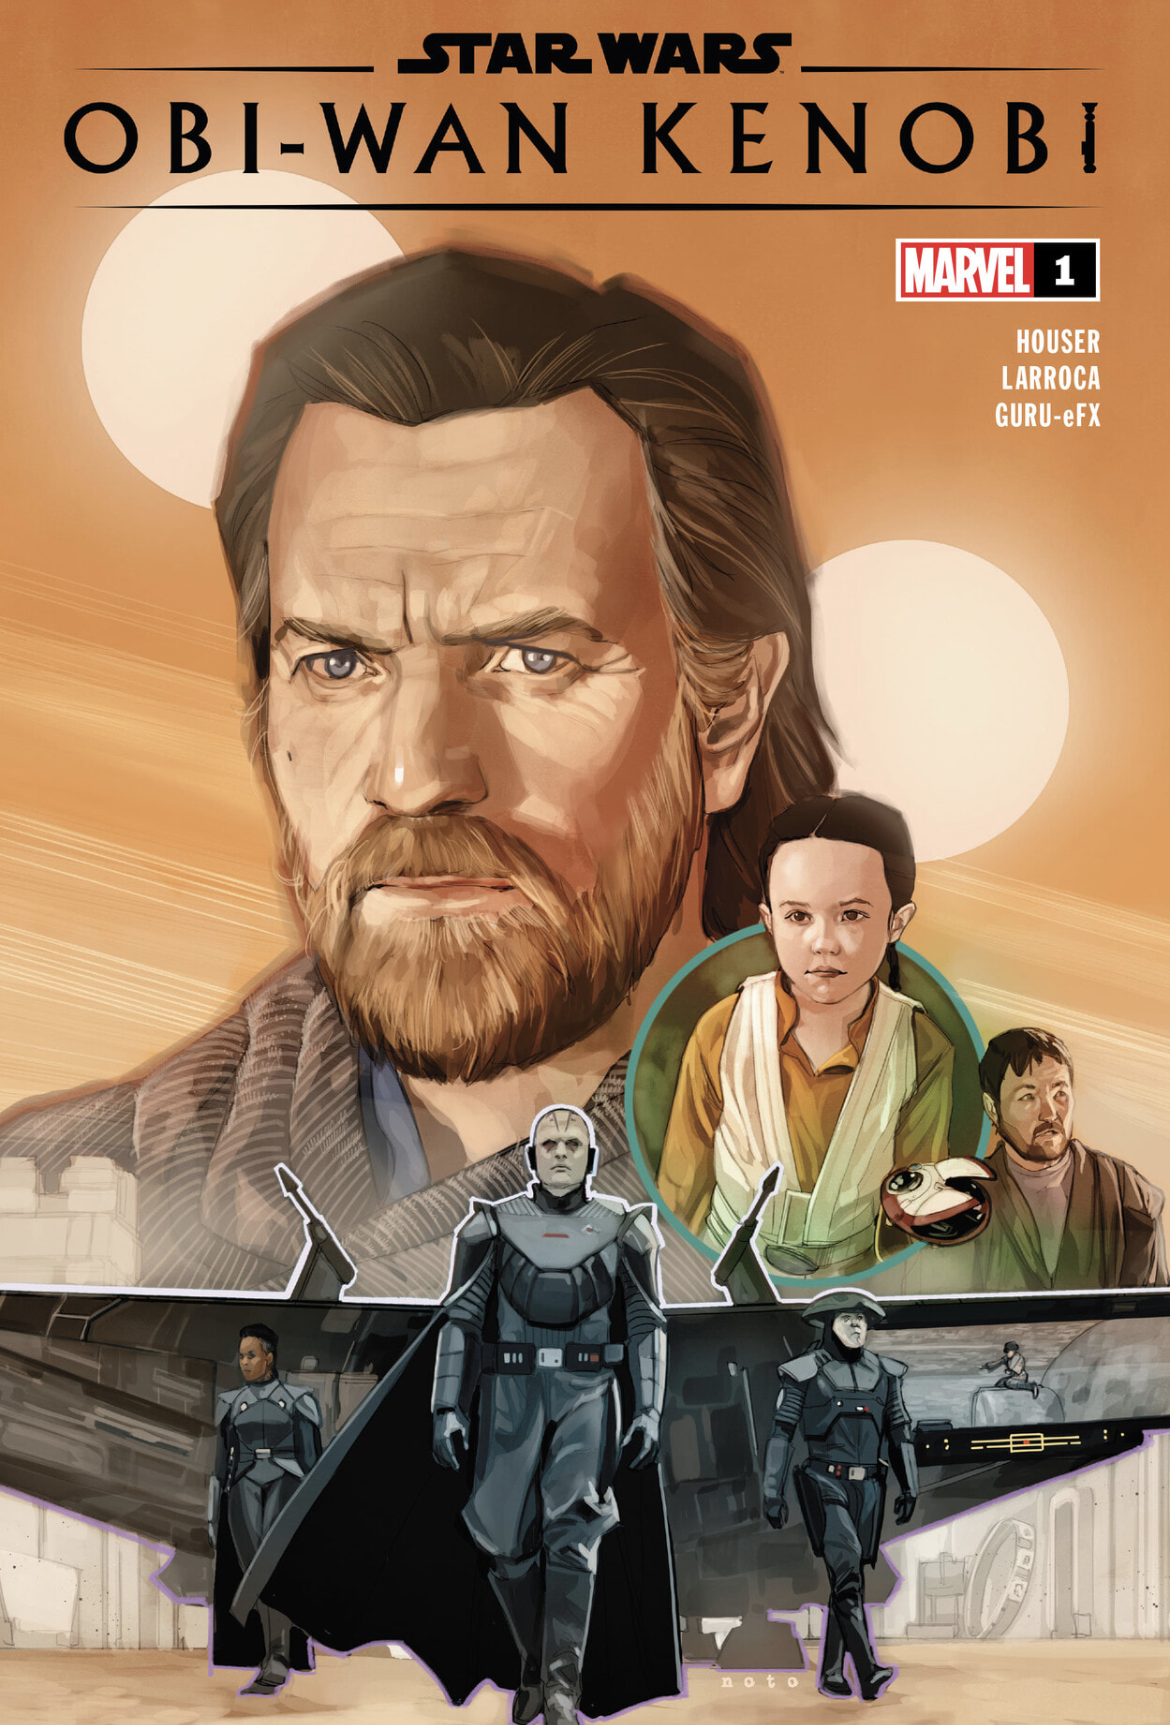 Star Wars: Obi-Wan Kenobi #1 cover